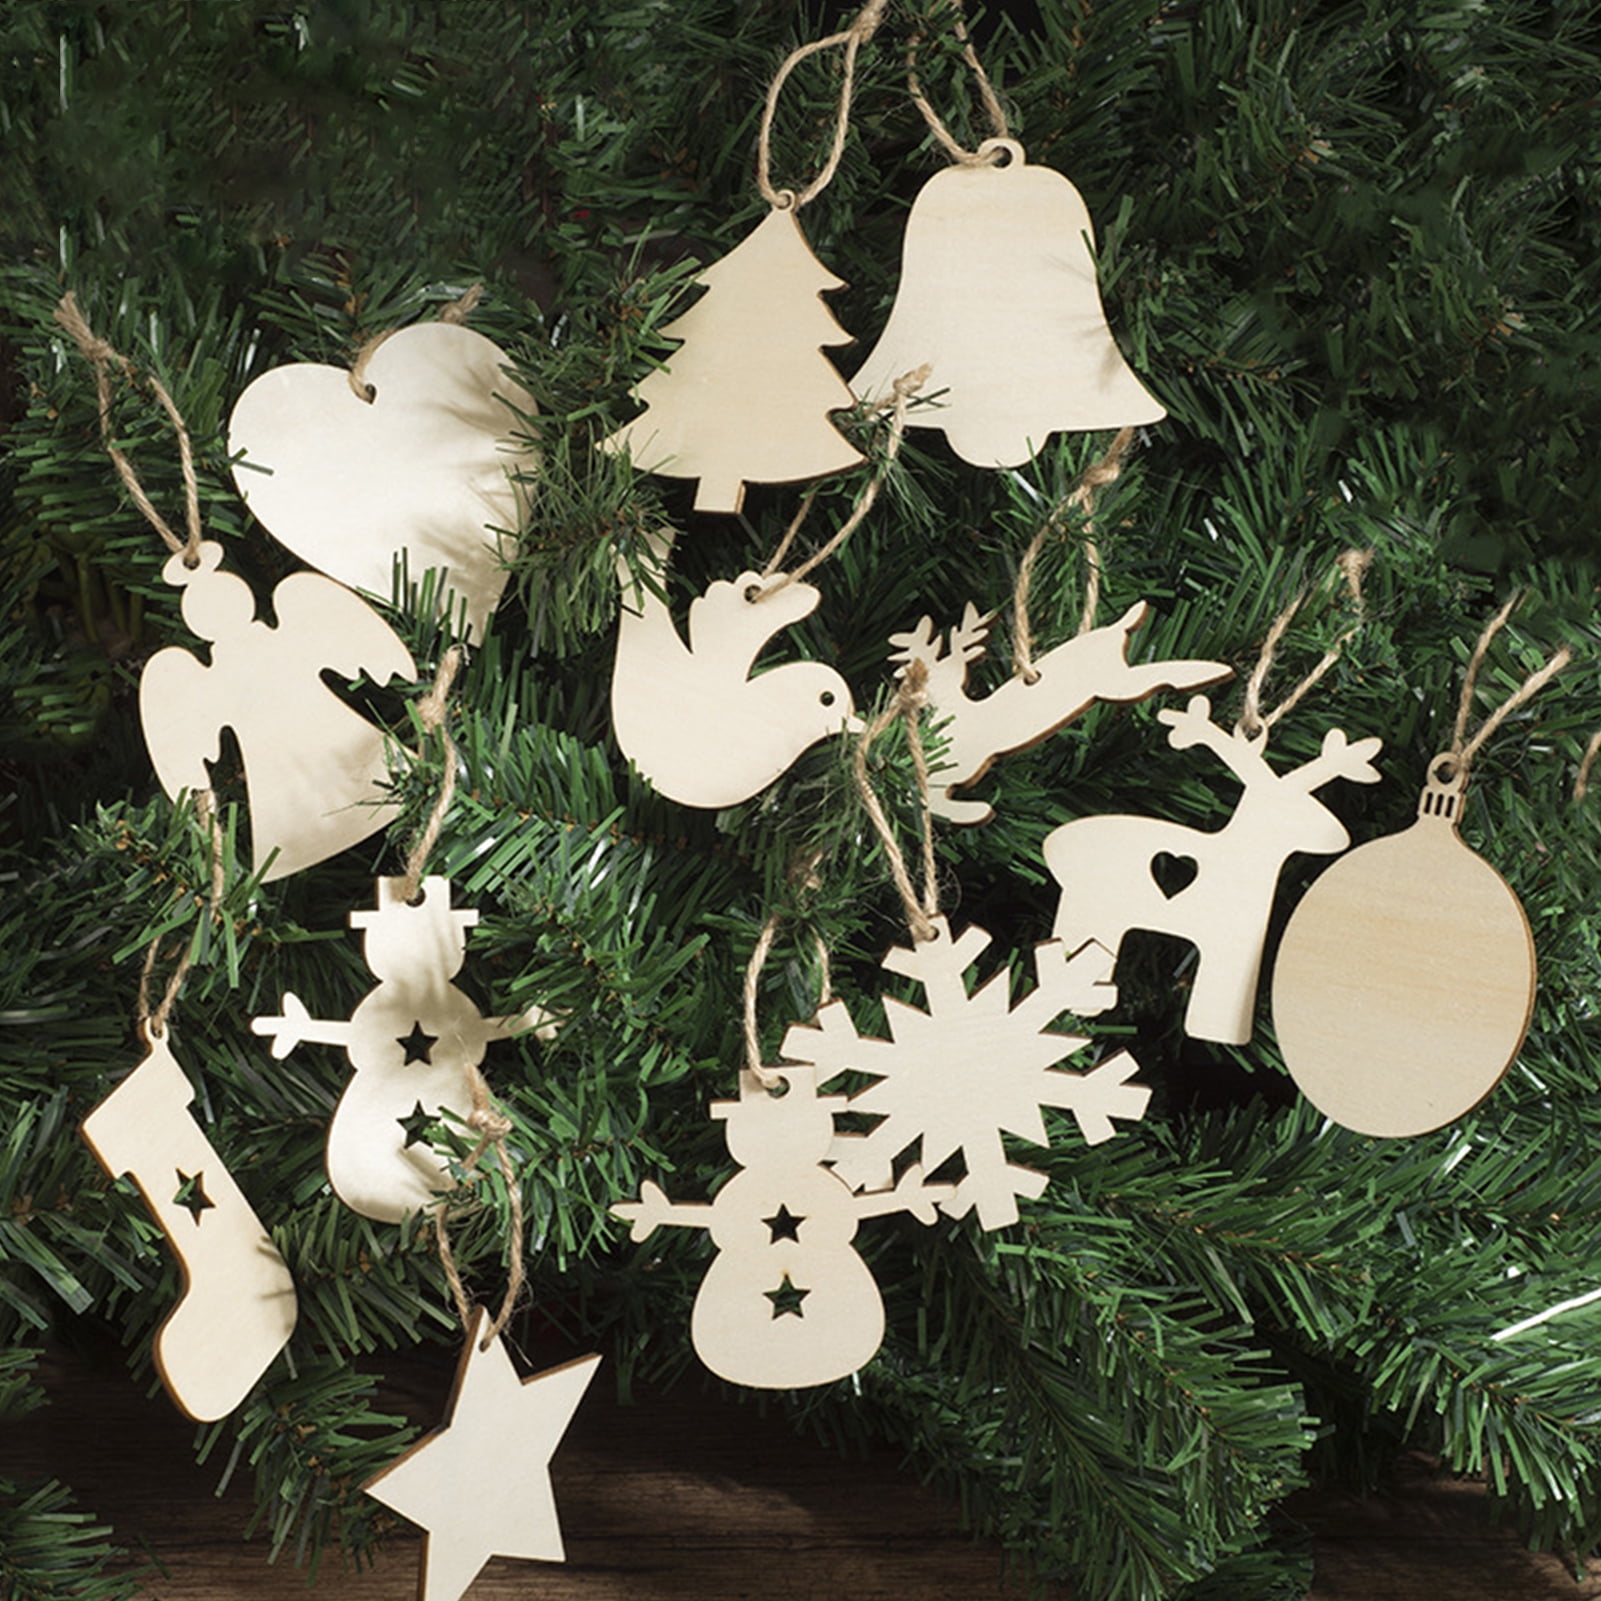 50pcs Wood Christmas Tree Ornament Wooden Hanging Pendants Xmas Home Party Decor